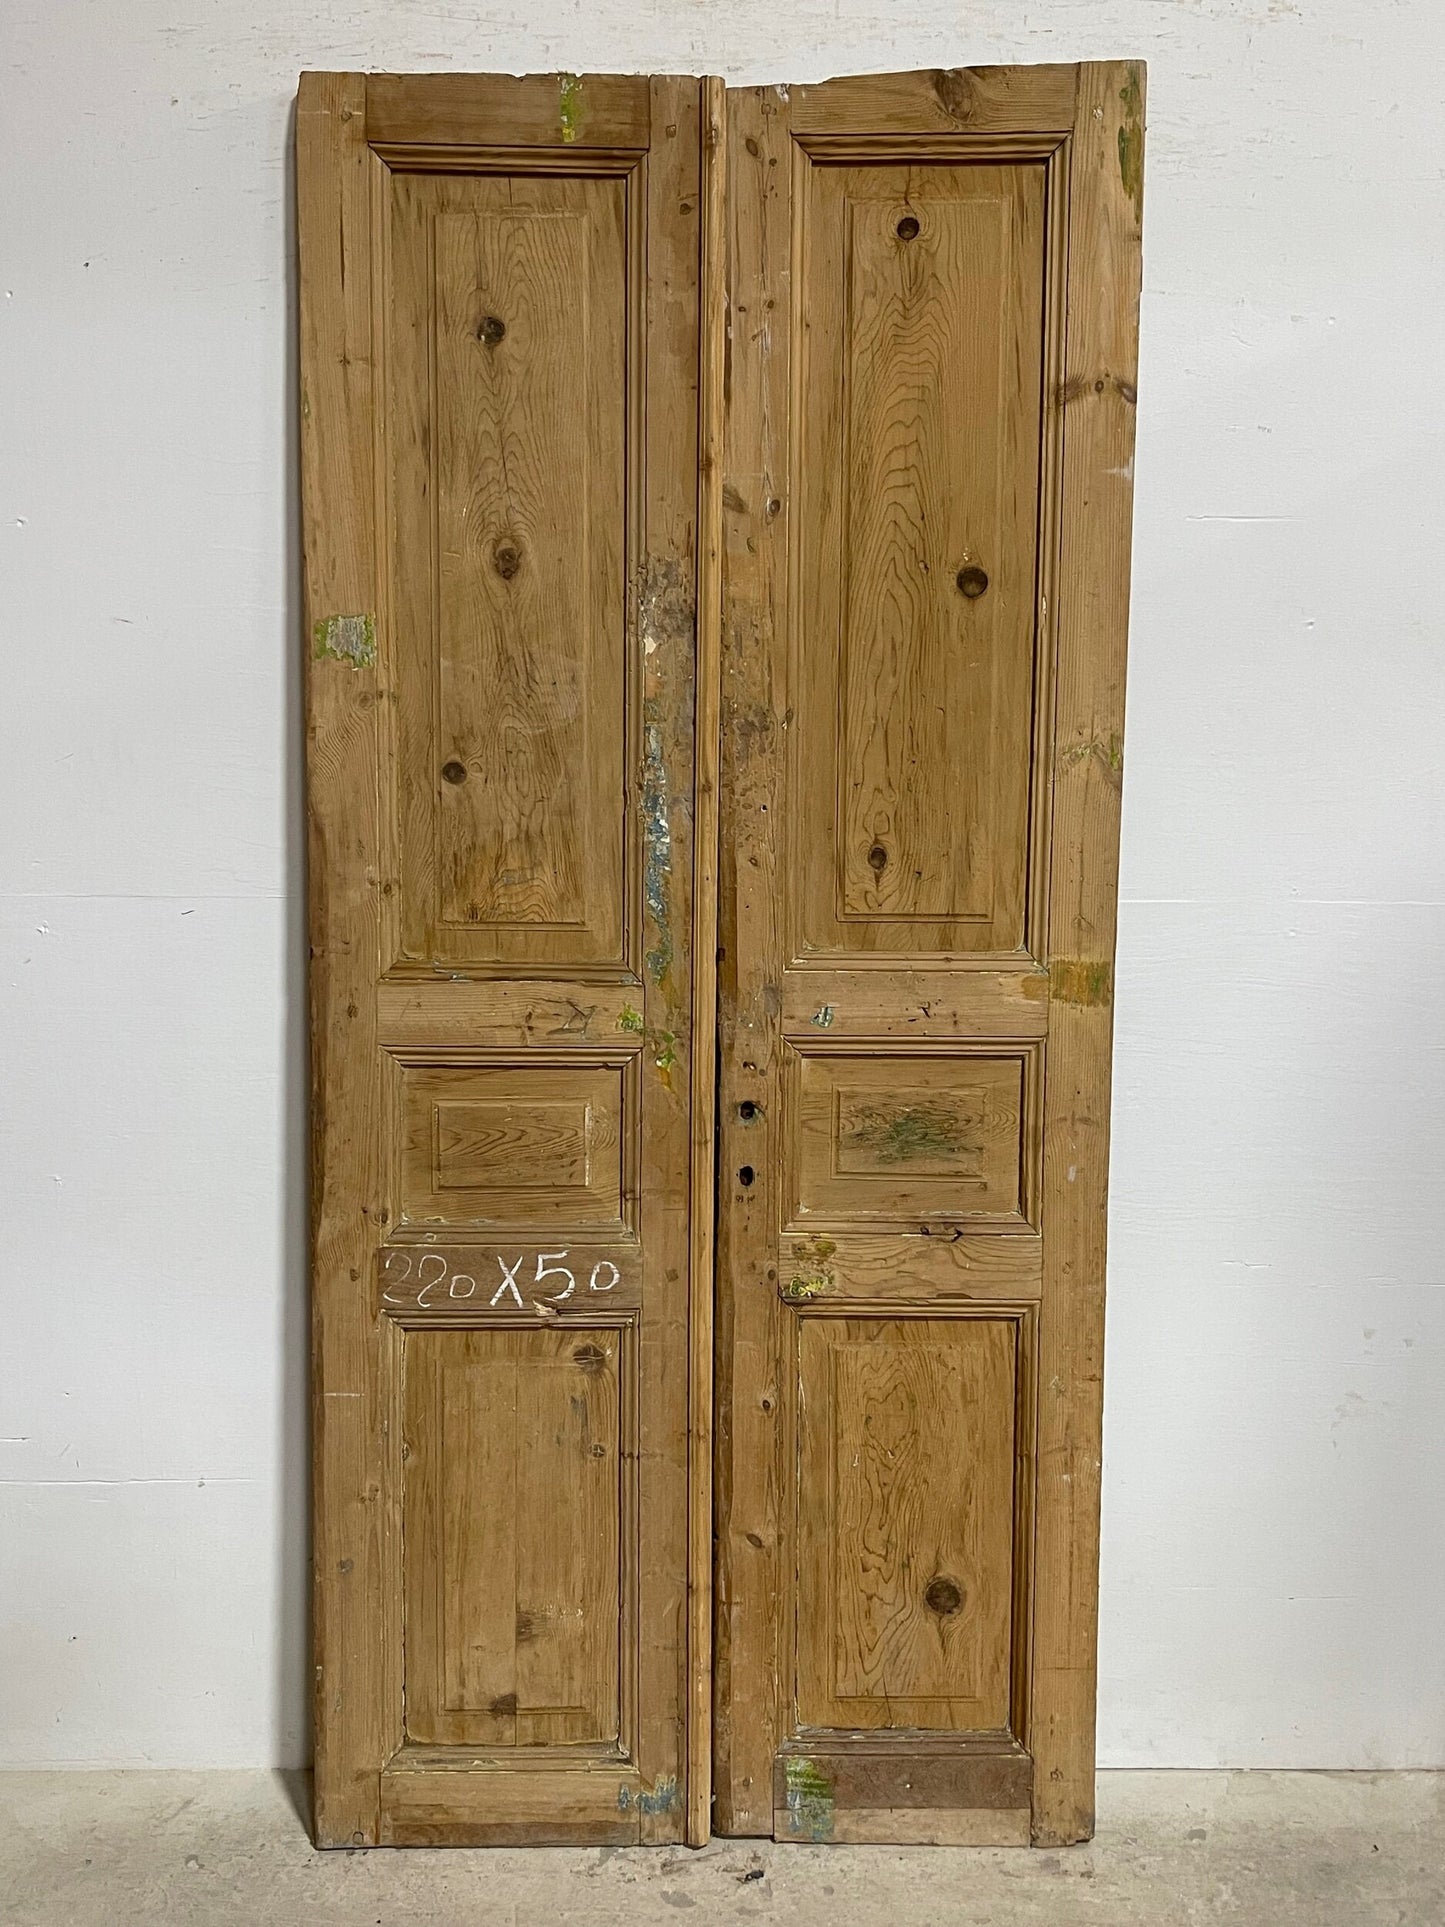 Antique french panel doors (89.5 x 39.75)  I088